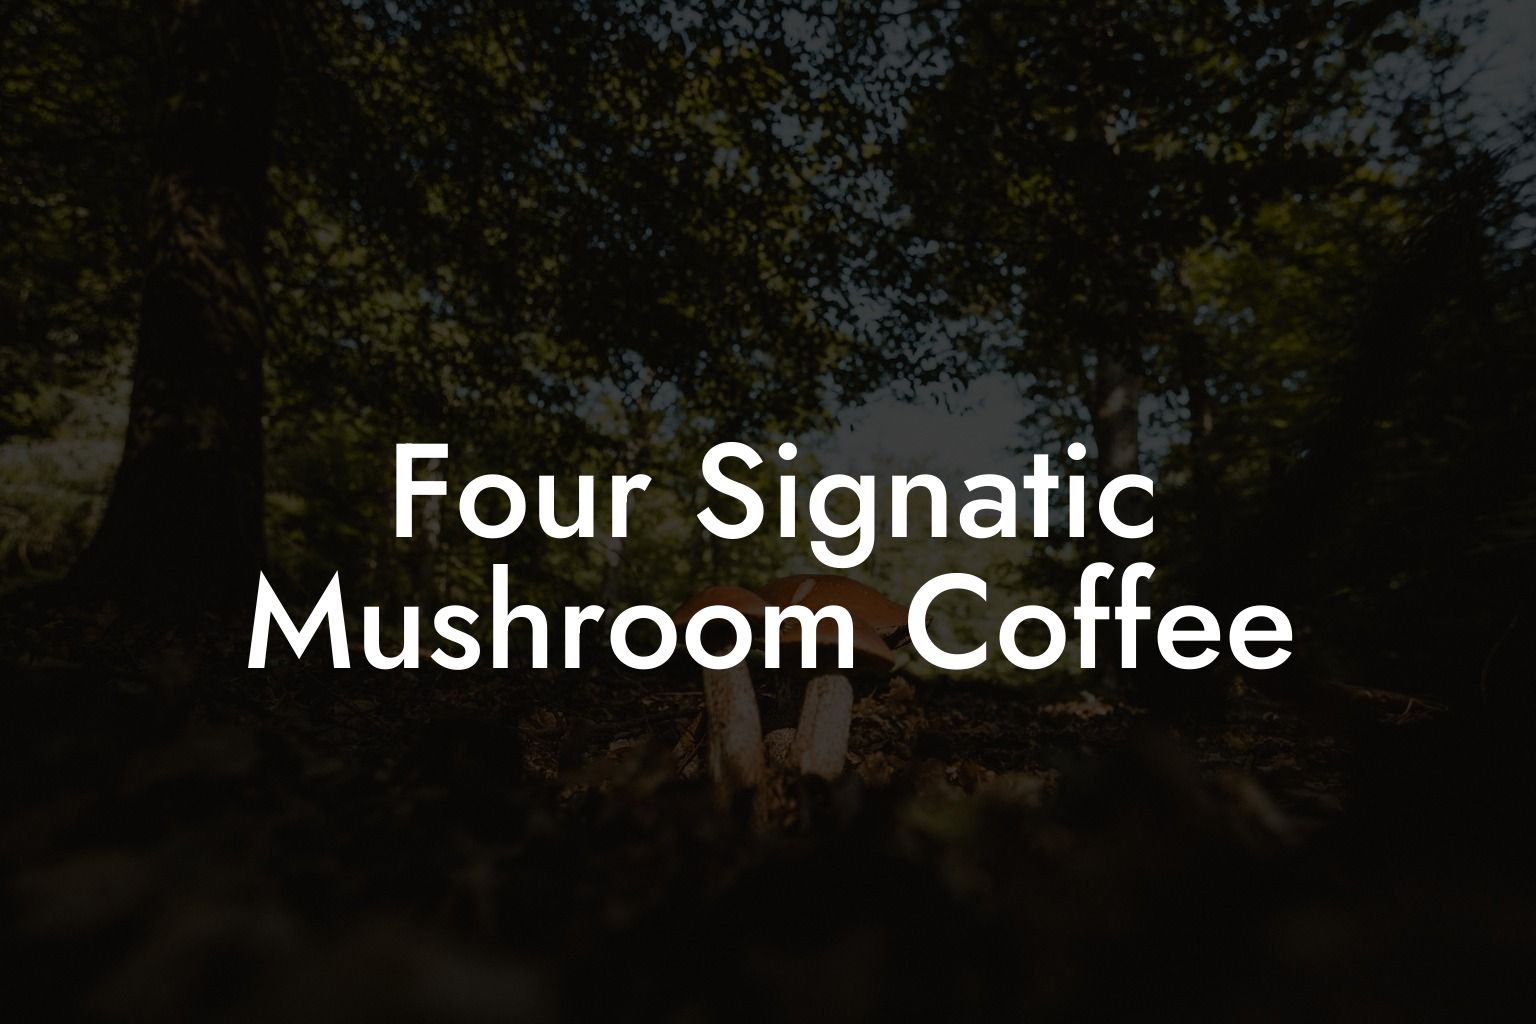 Four Signatic Mushroom Coffee